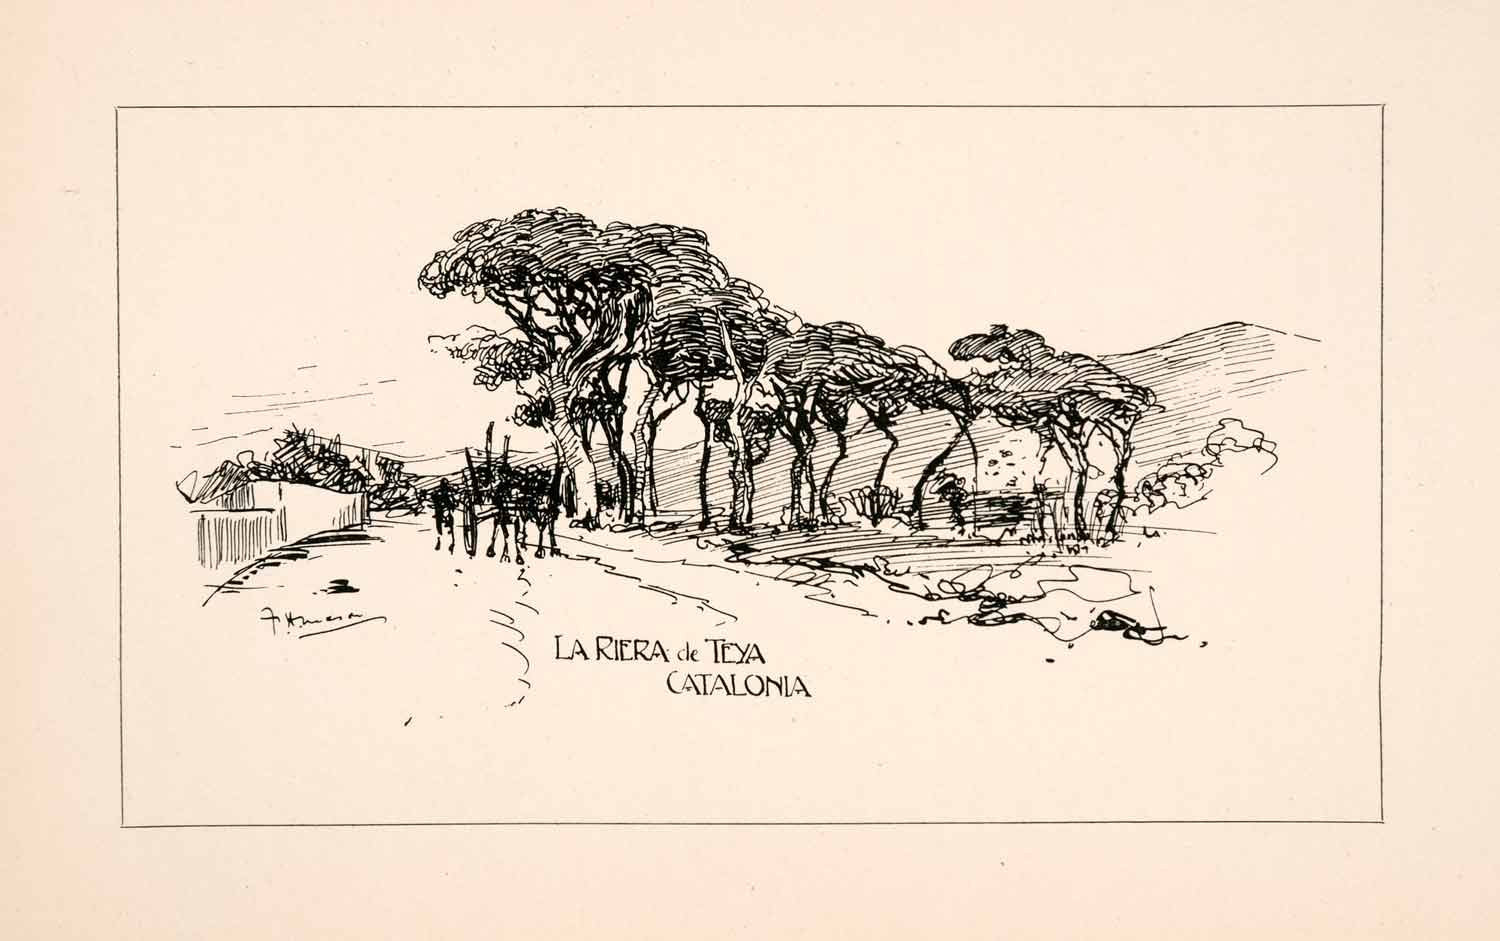 1905 Lithograph La Riera de Teya Catalonia Spain Landscape Sketch Drawing XGKA4